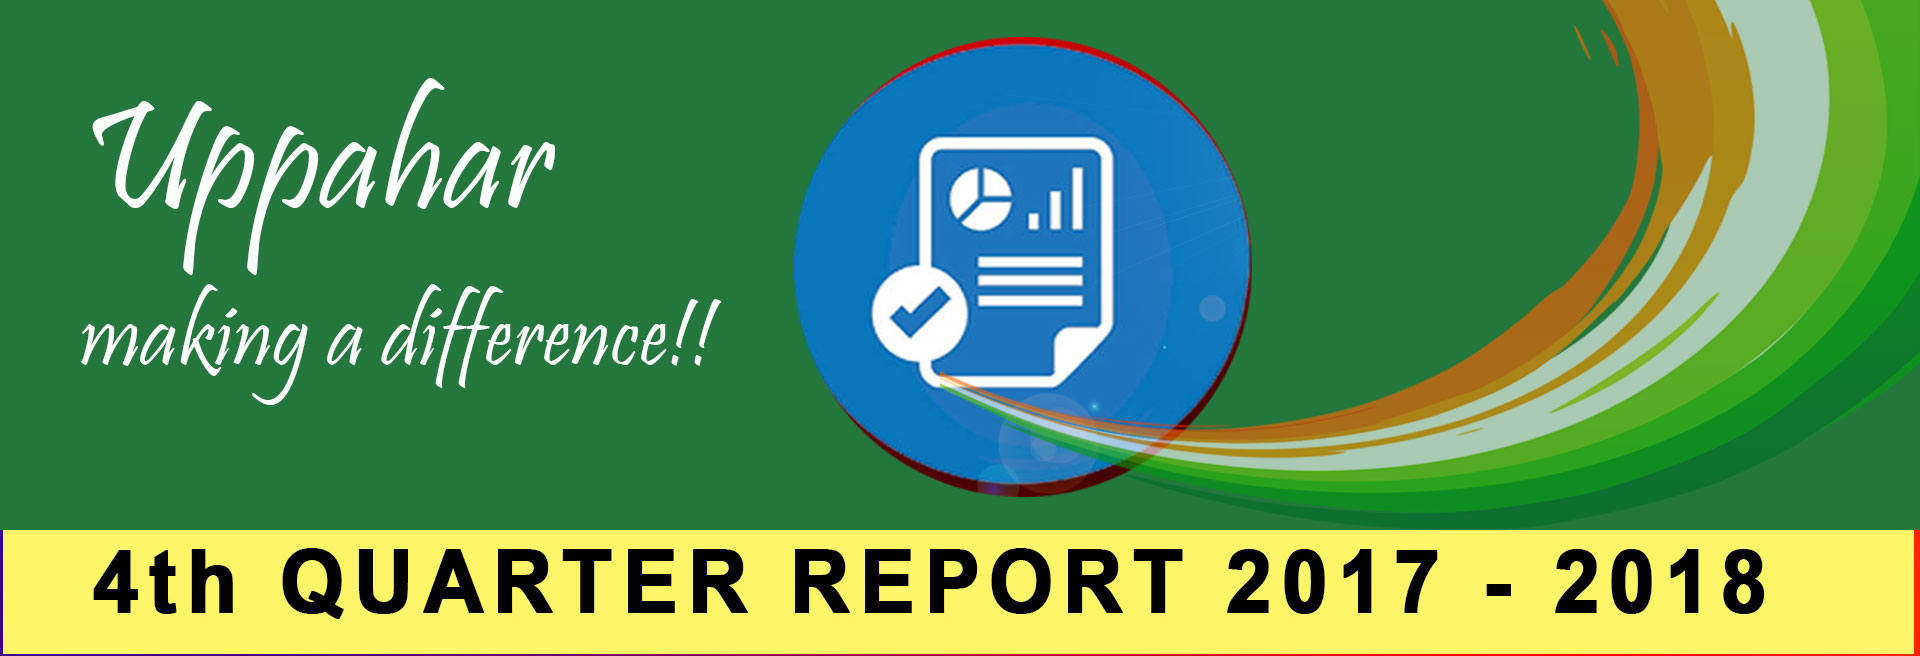 Uppahar India 3rd Quarterly Report 2017-2018